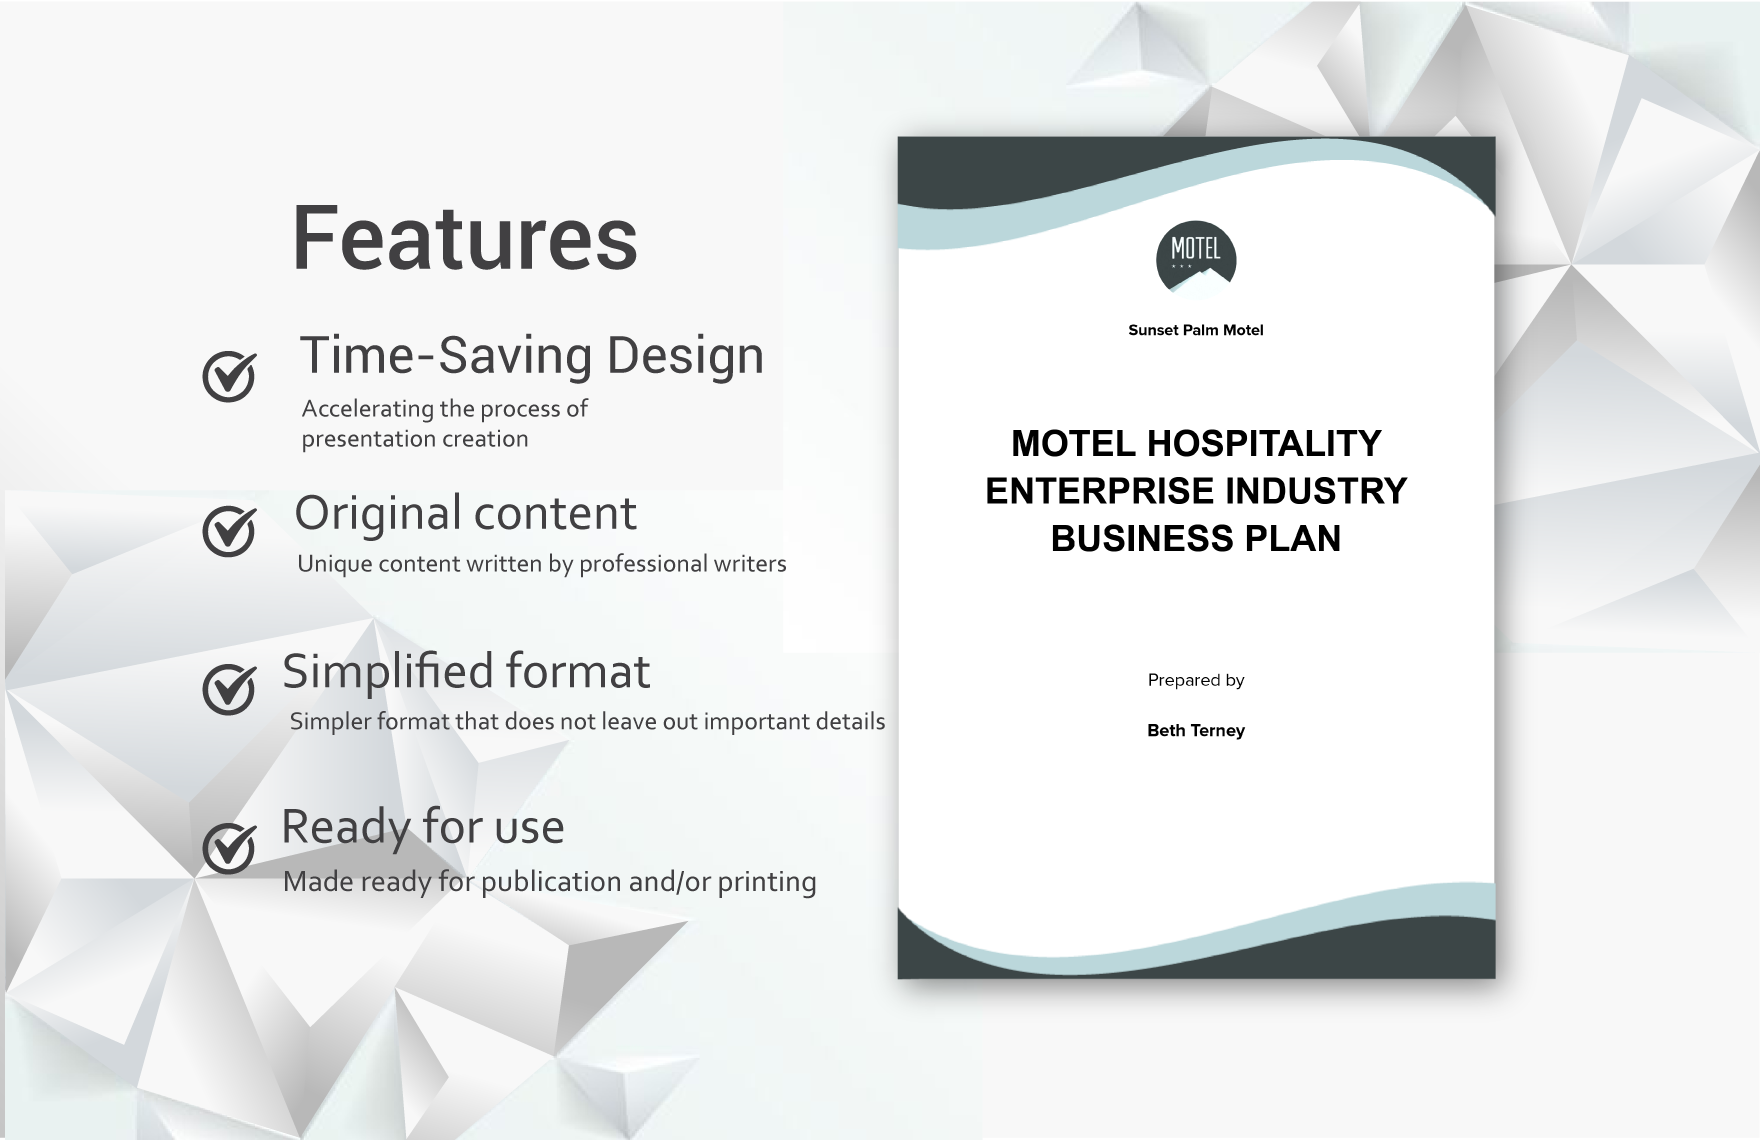 Motel Hospitality Enterprise Industry Business Plan Template